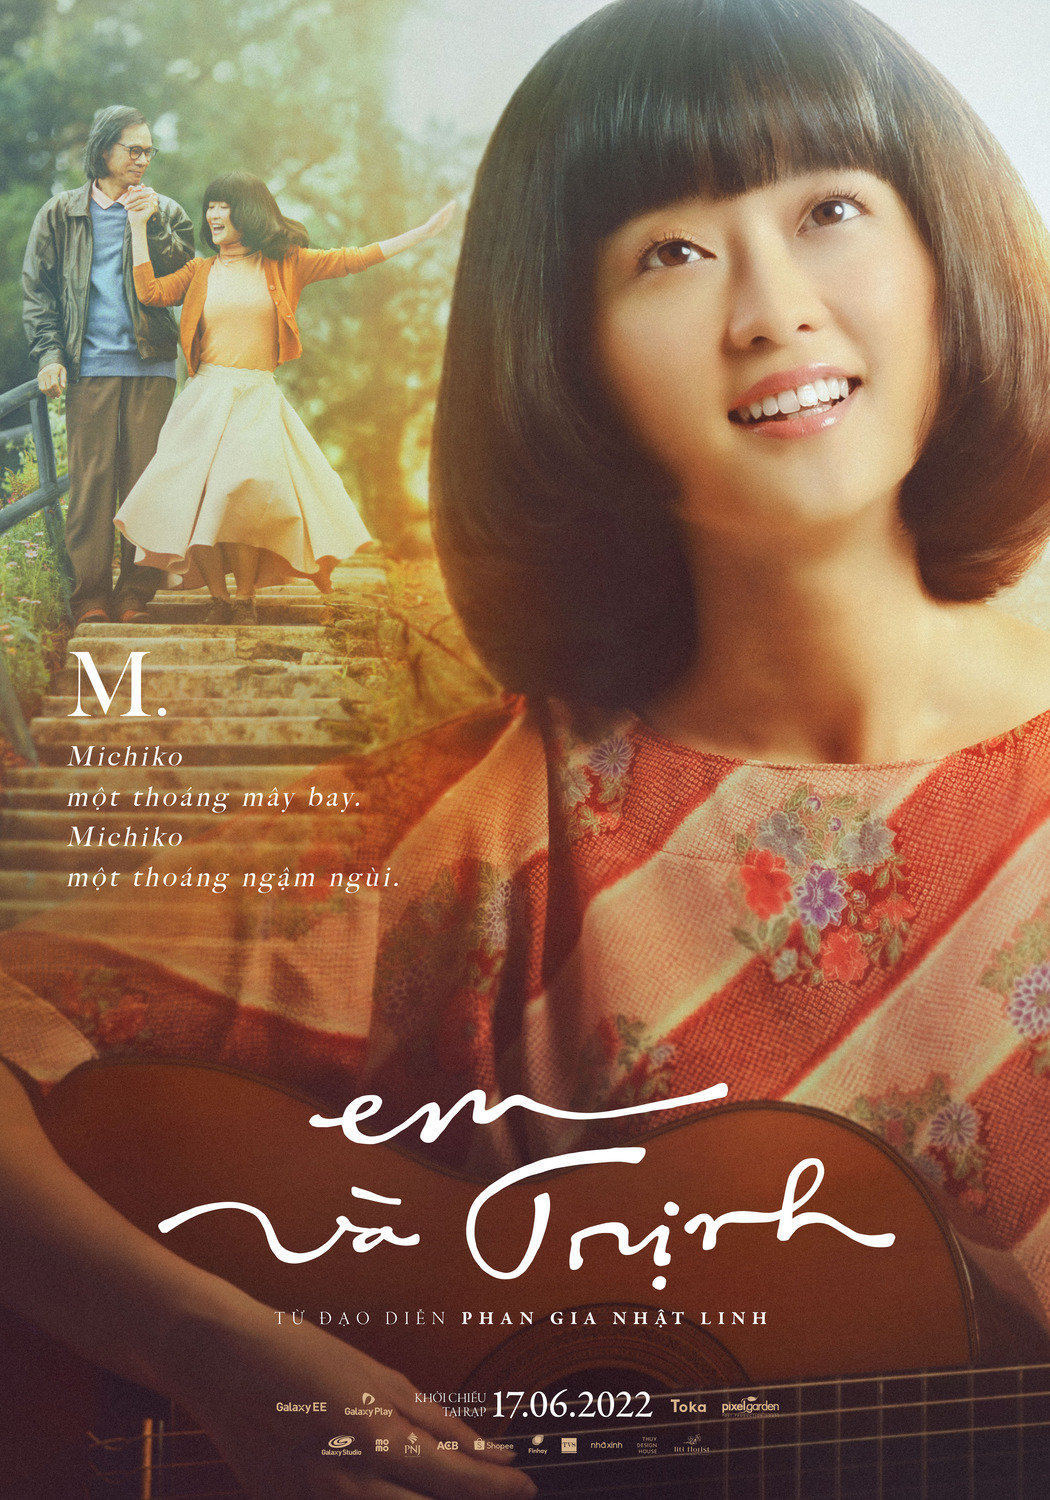 Extra Large Movie Poster Image for Em Va Trinh (#15 of 19)